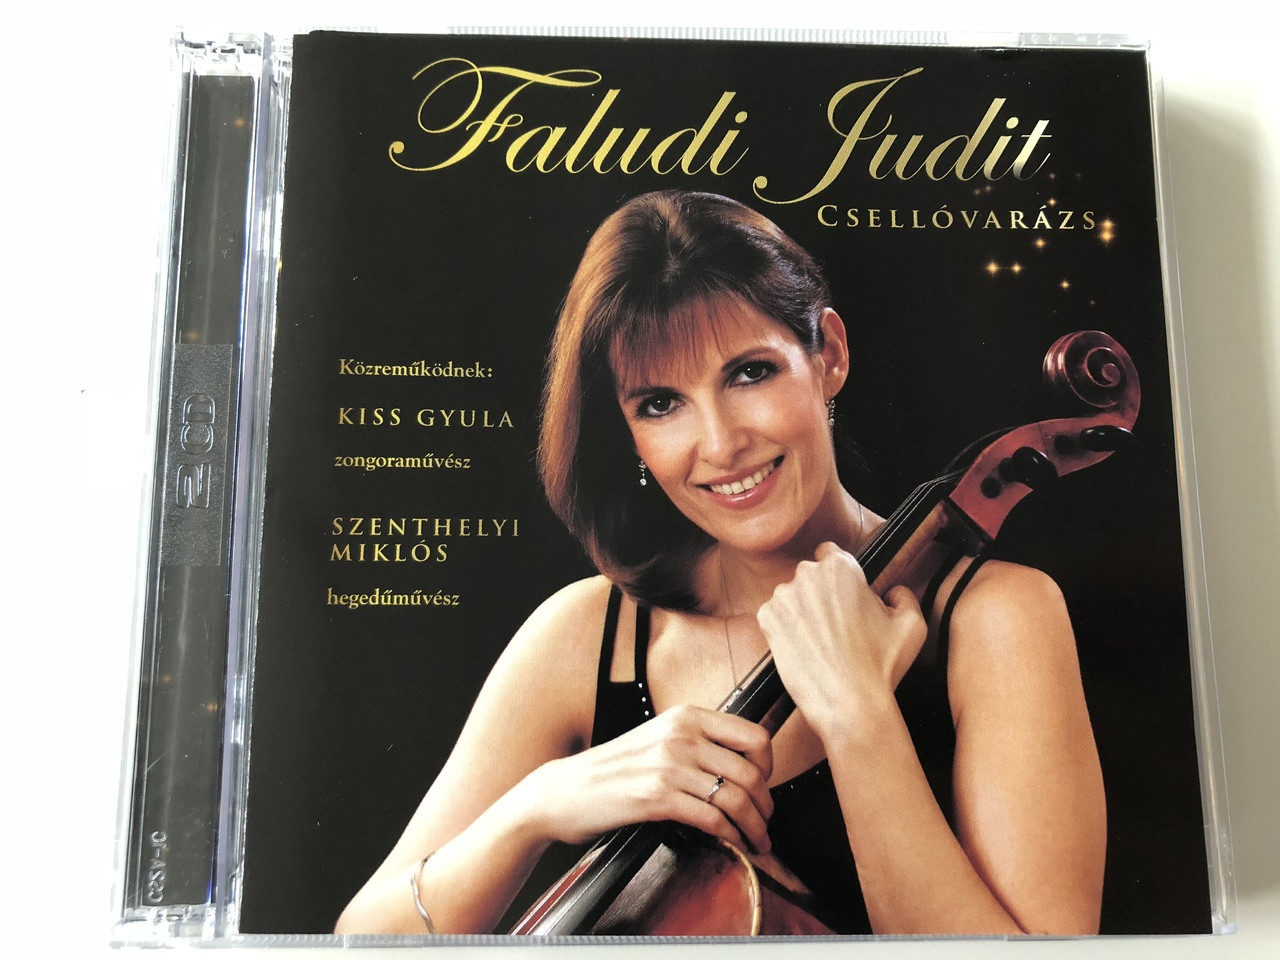 Faludi Judit - Csellóvarázs CD Chello Magic / Faludi Judit - Violoncello /  Kiss Gyula - Piano / Szenthelyi Miklós - Violin - bibleinmylanguage